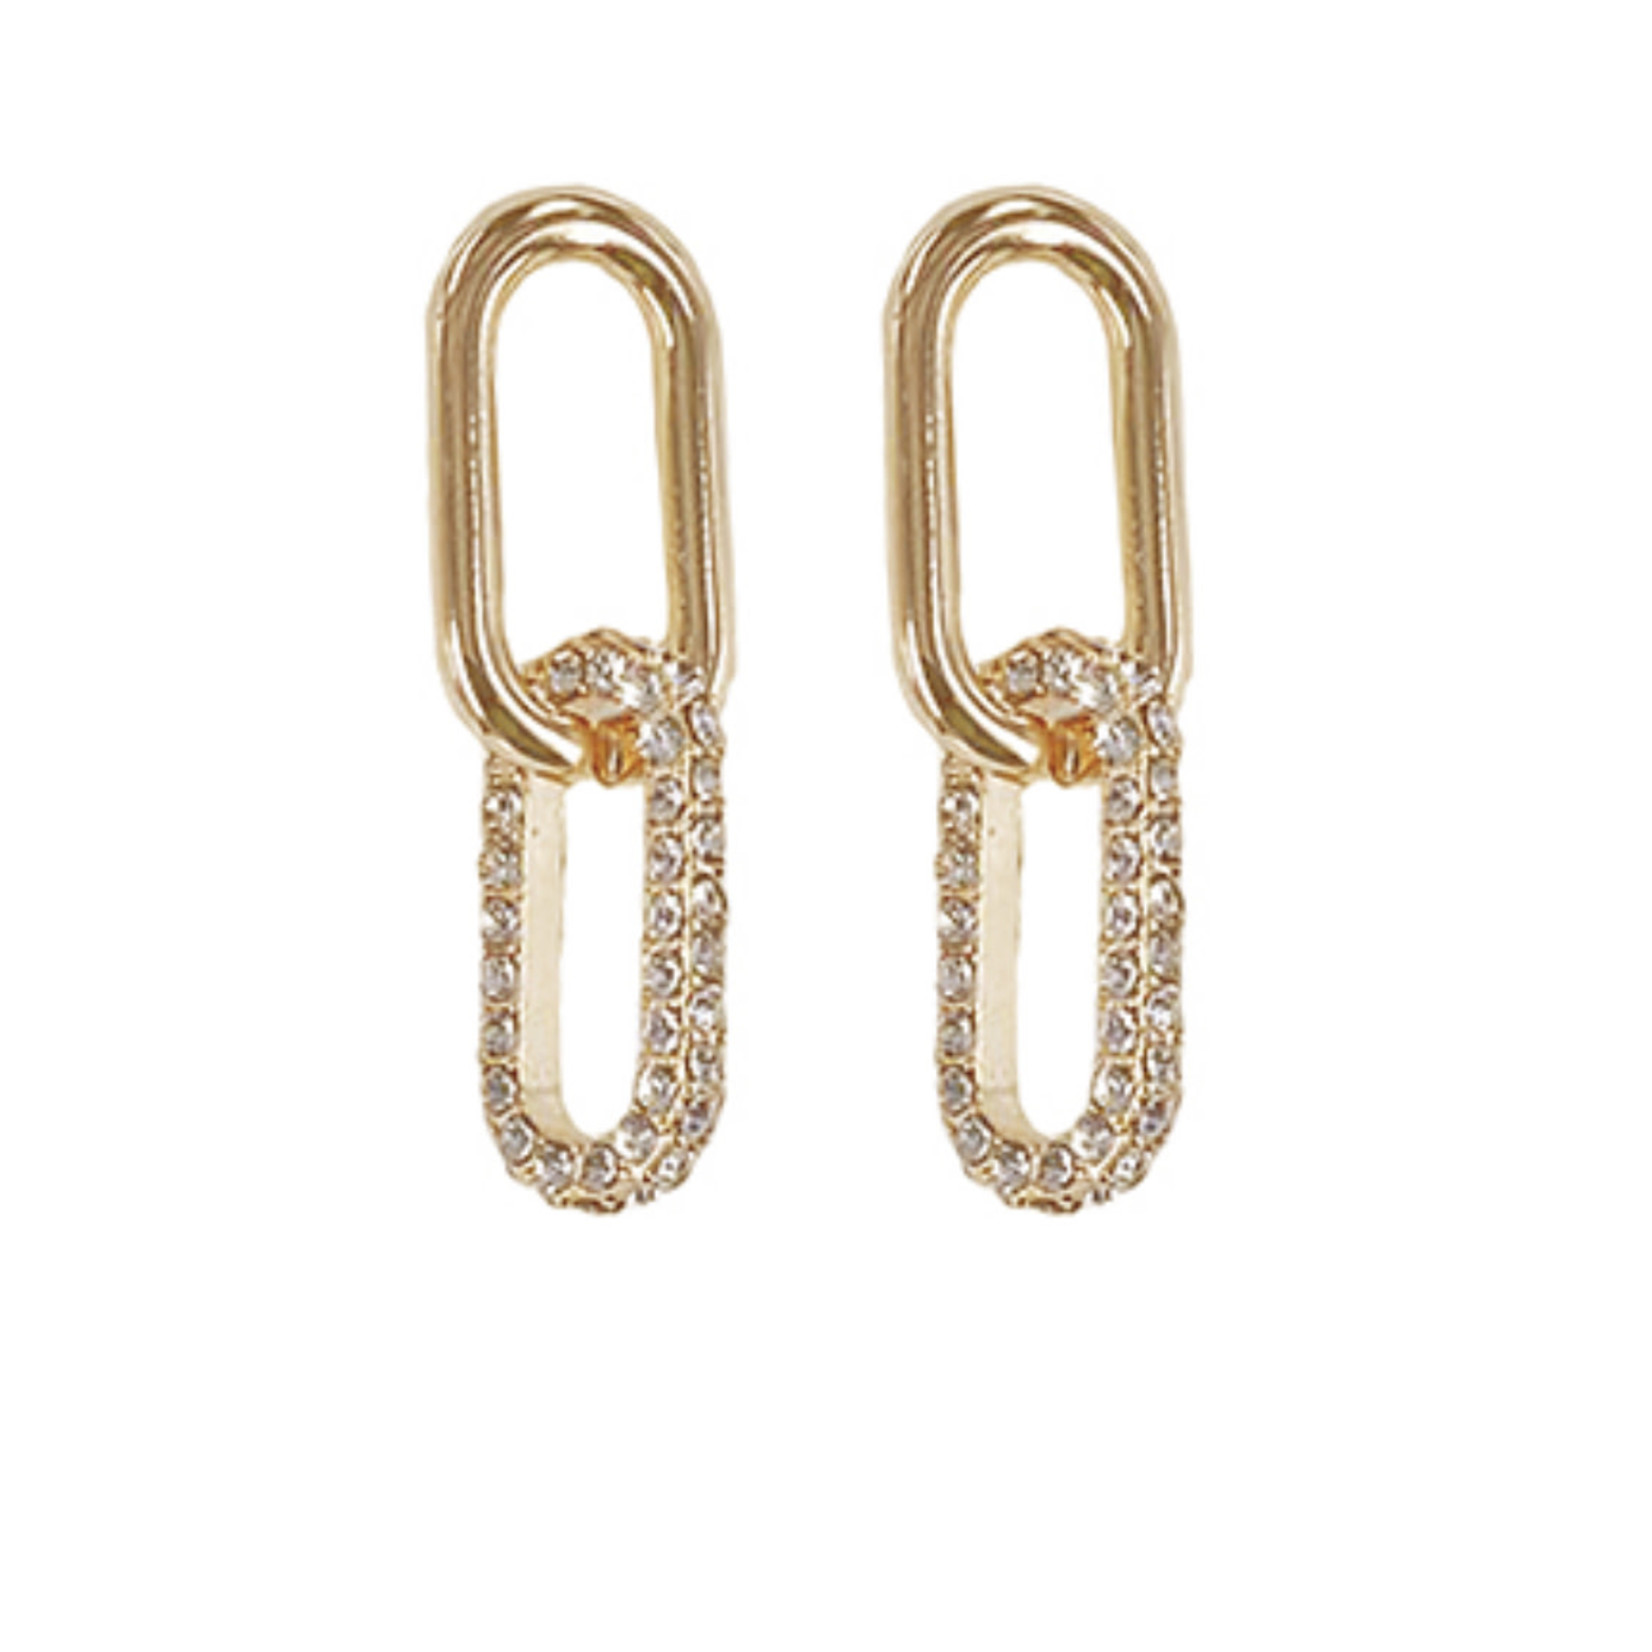 Gold Rhinestone Pave Link Earrings